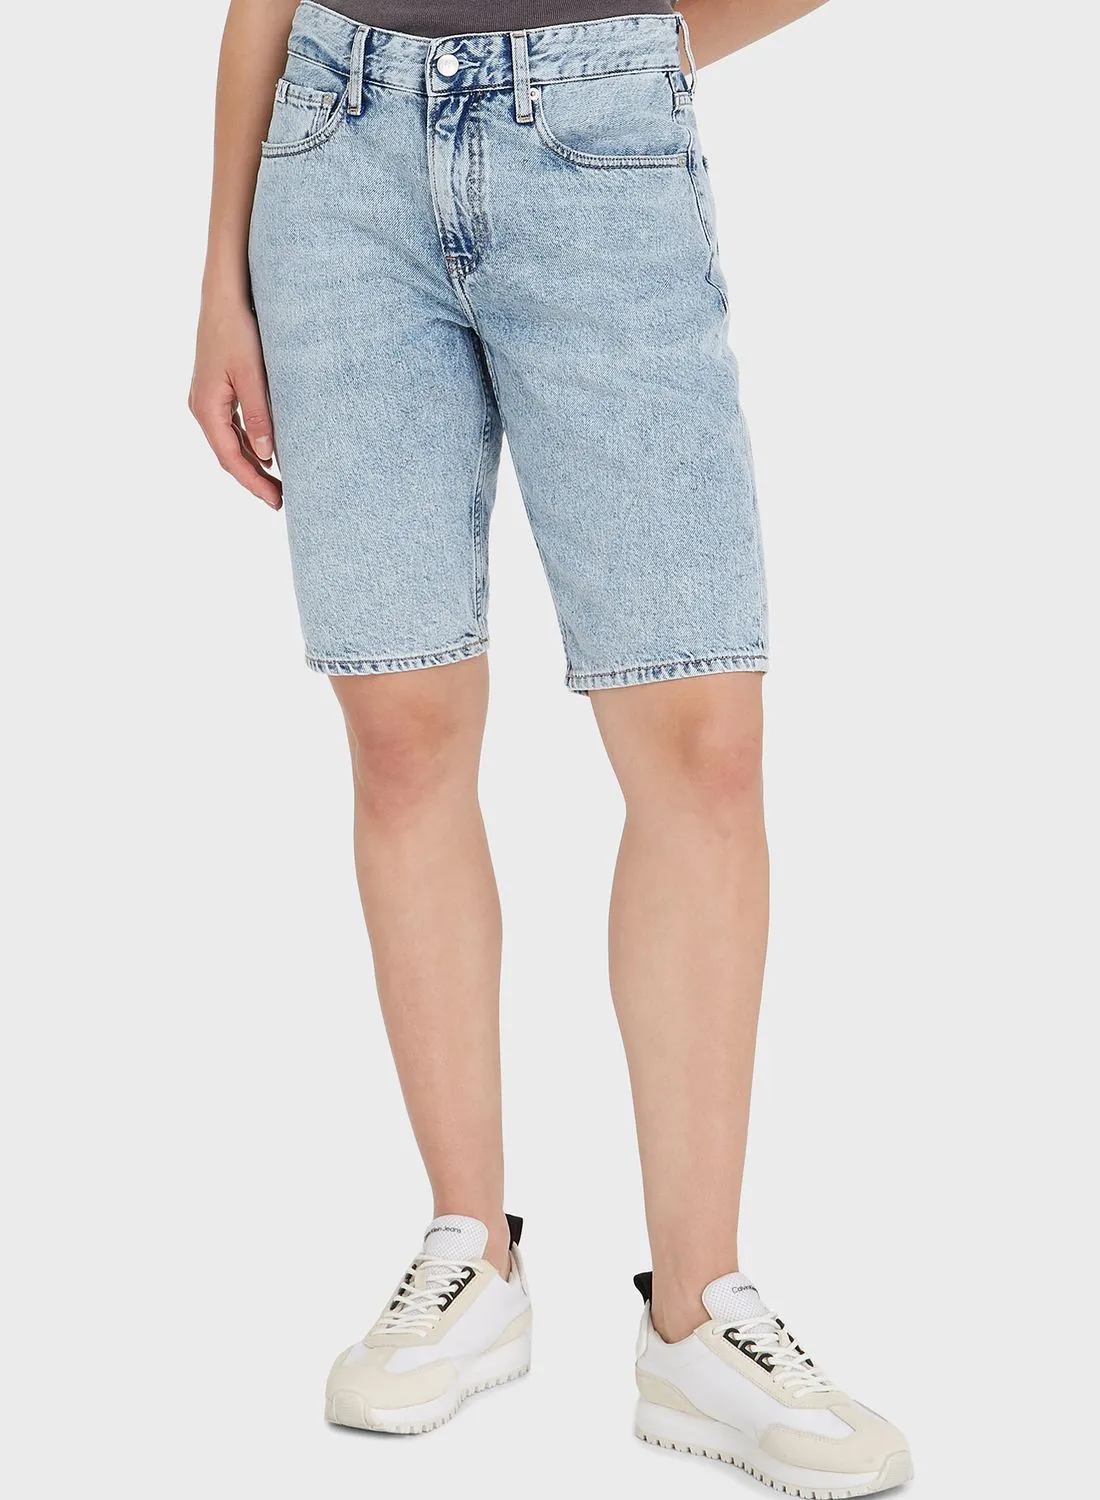 Calvin Klein Jeans Casual Denim Shorts